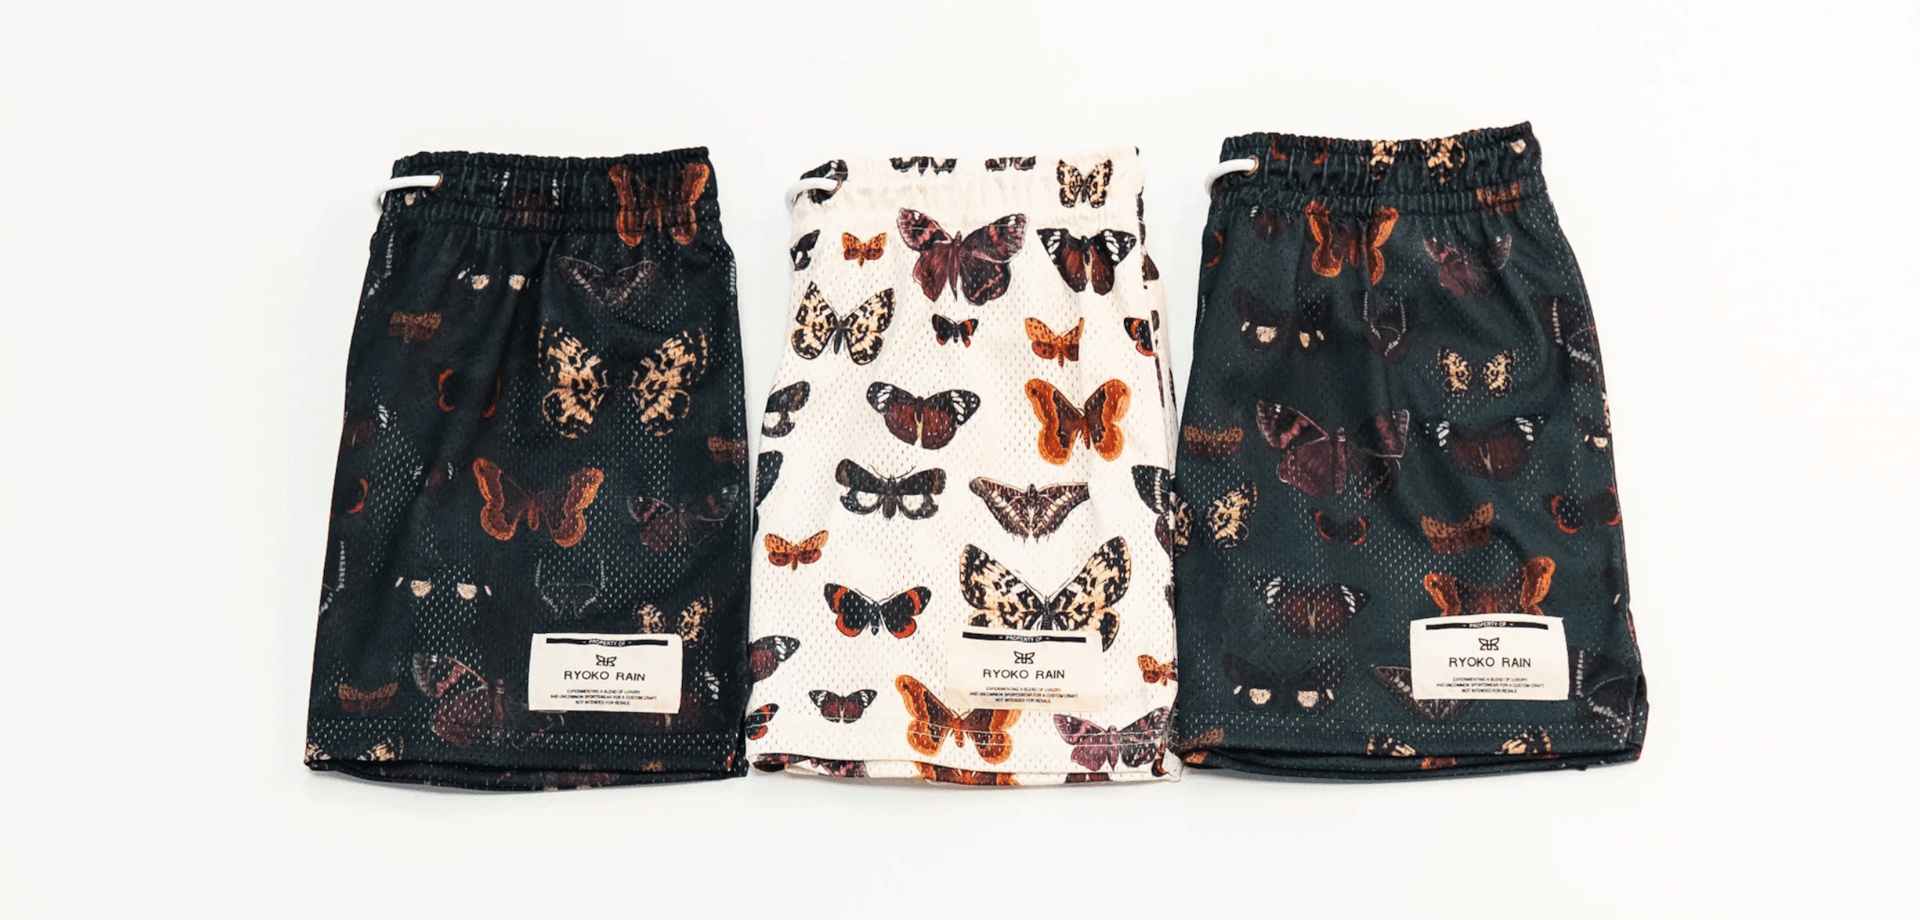 Catch Ryoko Rain’s Butterfly Effect Shorts